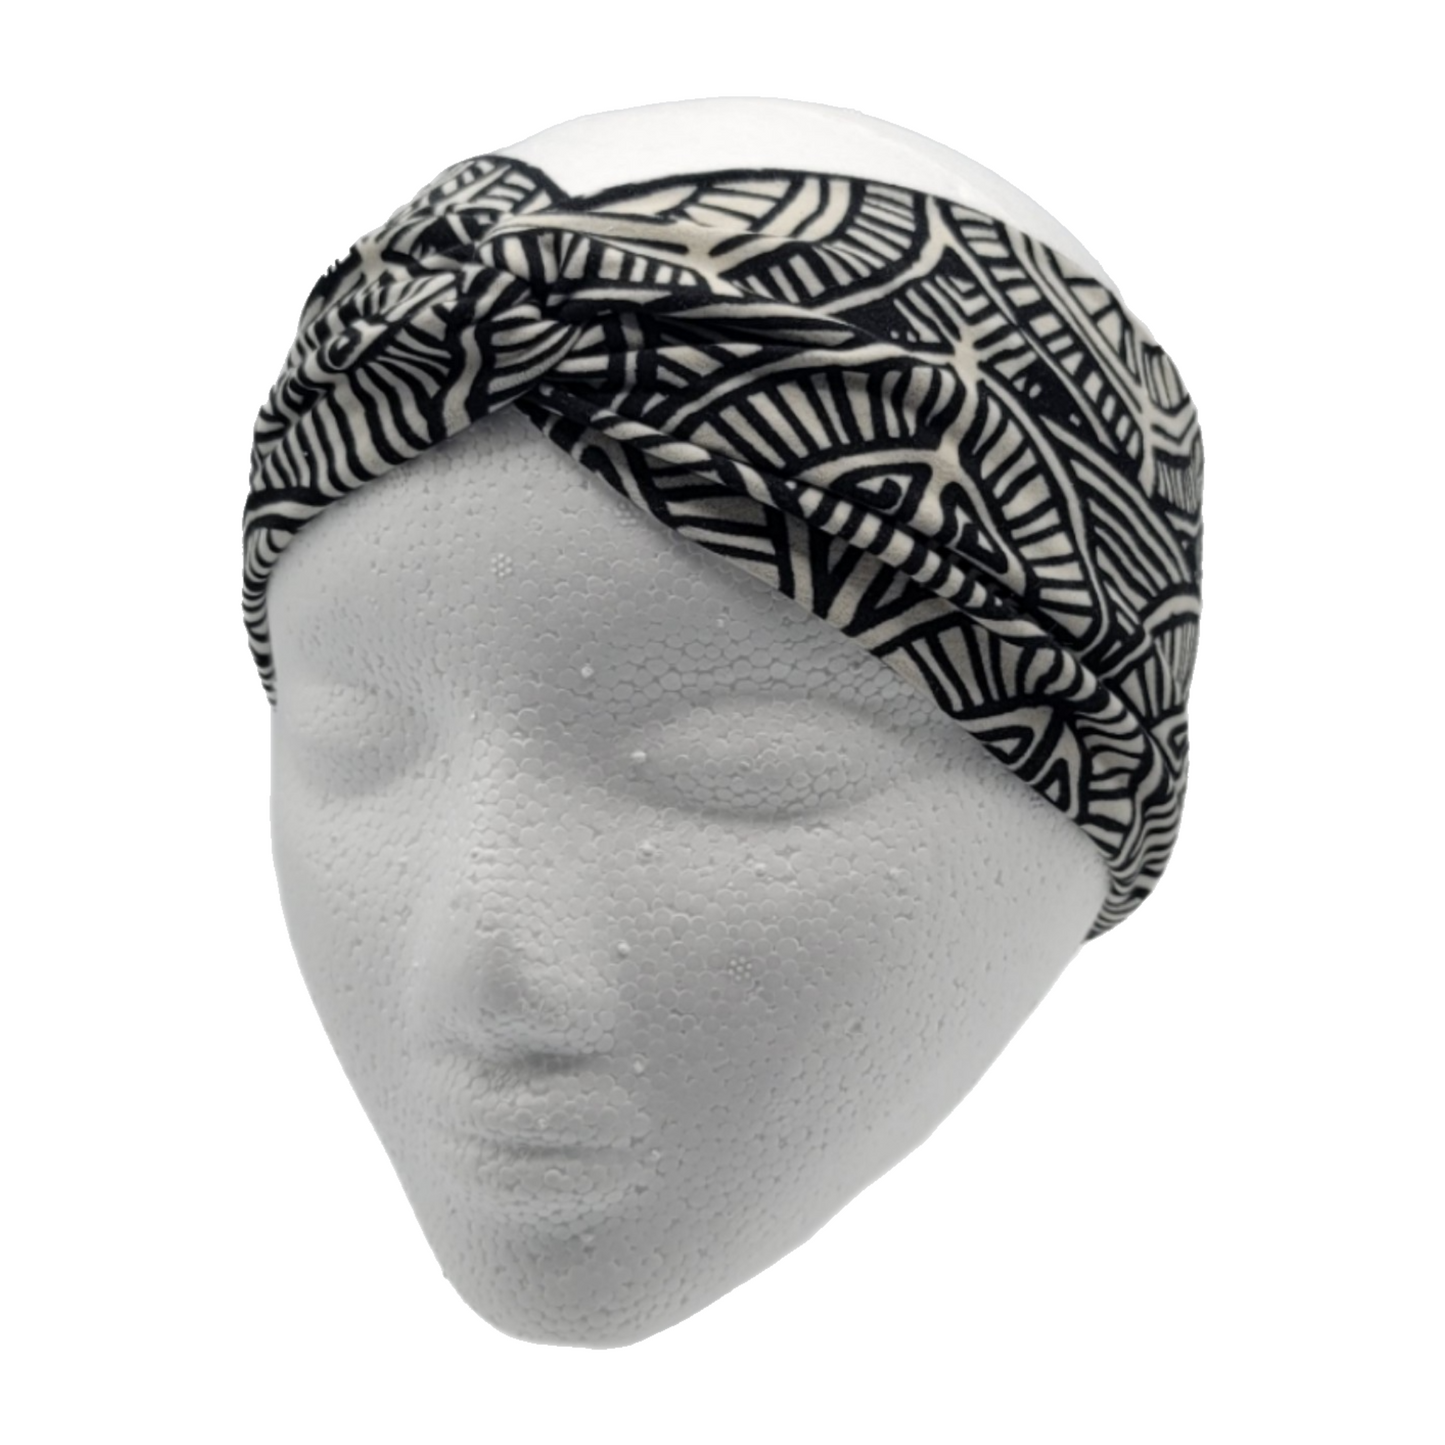 Twist Knot Knit Headband - Ethnic Print Black/Ivory